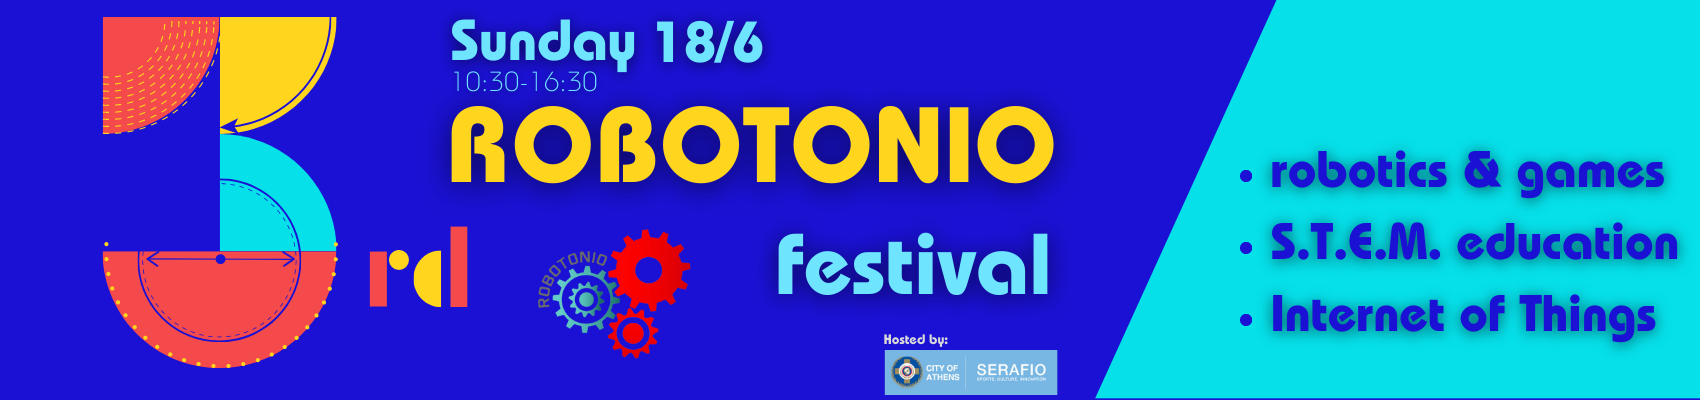 3rd robotonio festival for serafio